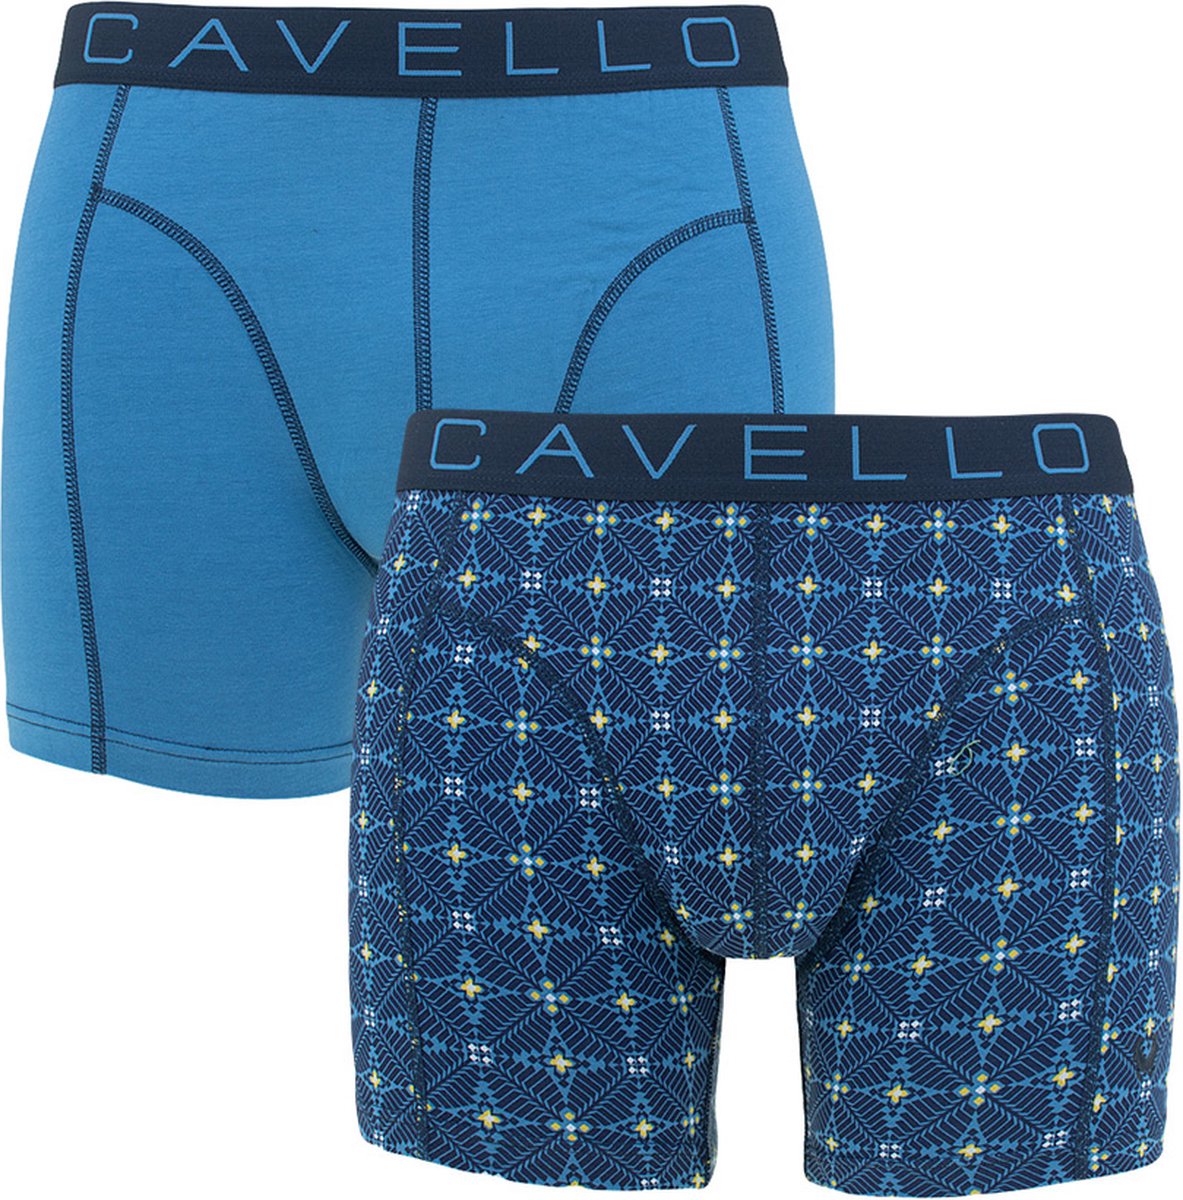 Cavello 2P print blauw - XXL